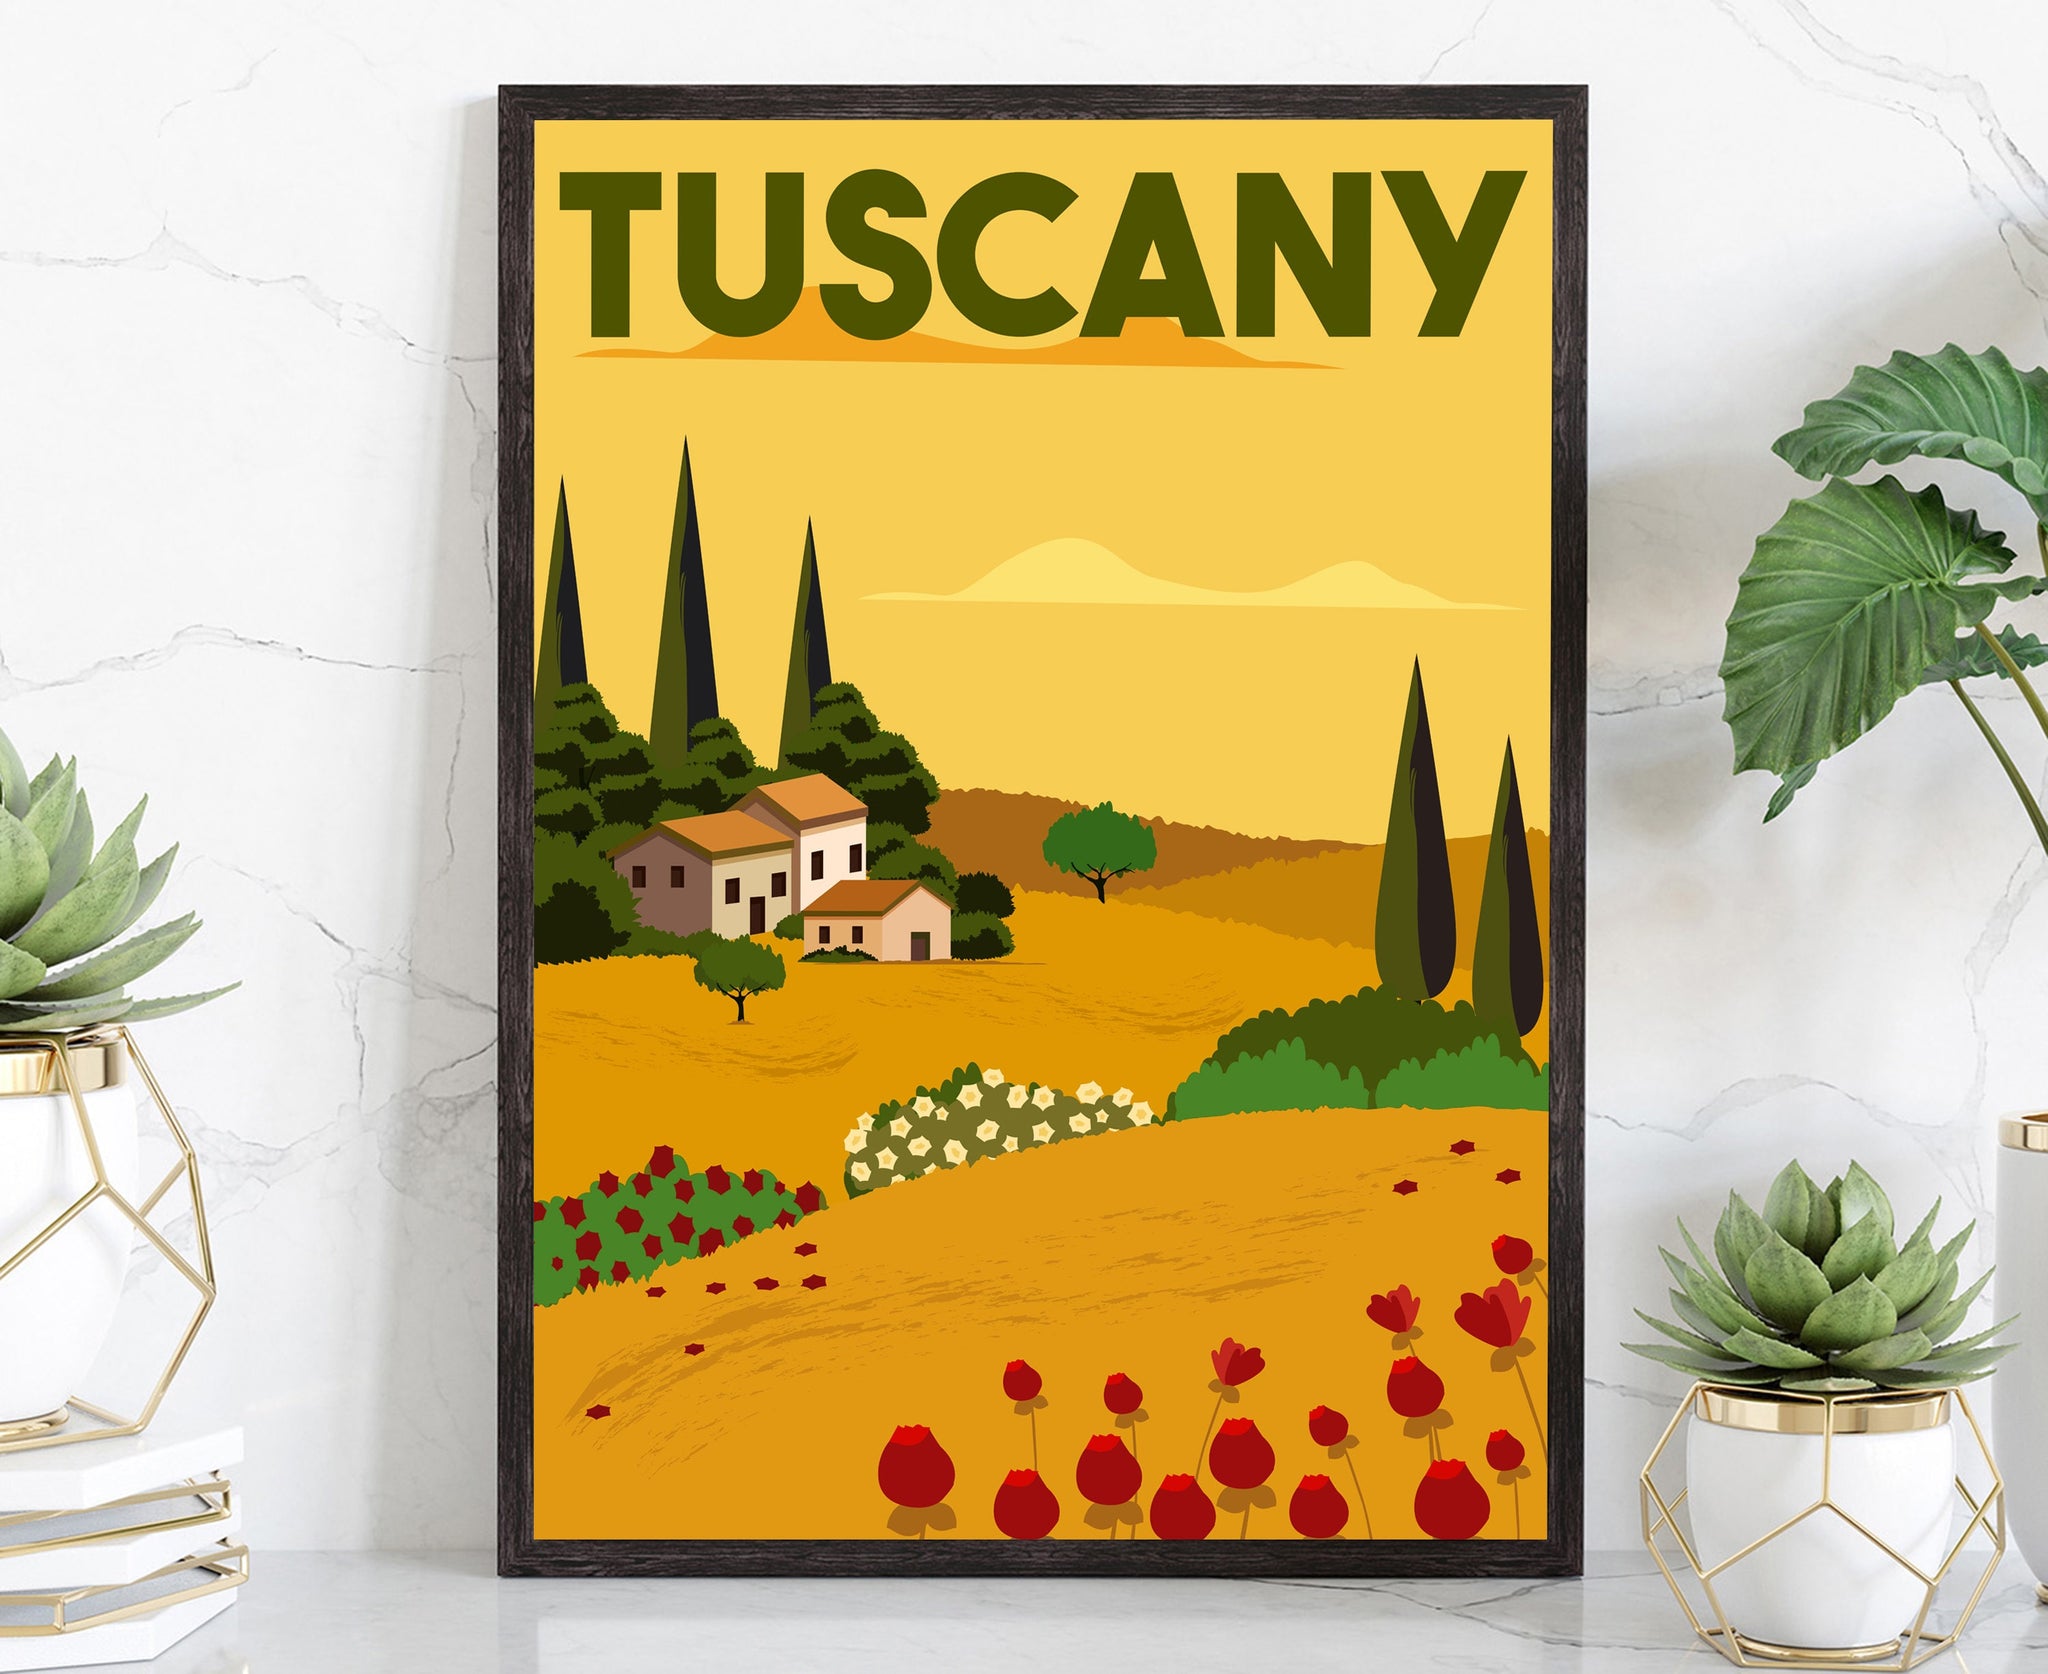 TUSCANY travel poster, Tuscany cityscape and landmark poster wall art, Home wall art prints, Office wall decoration, Italy Tuscany  posters